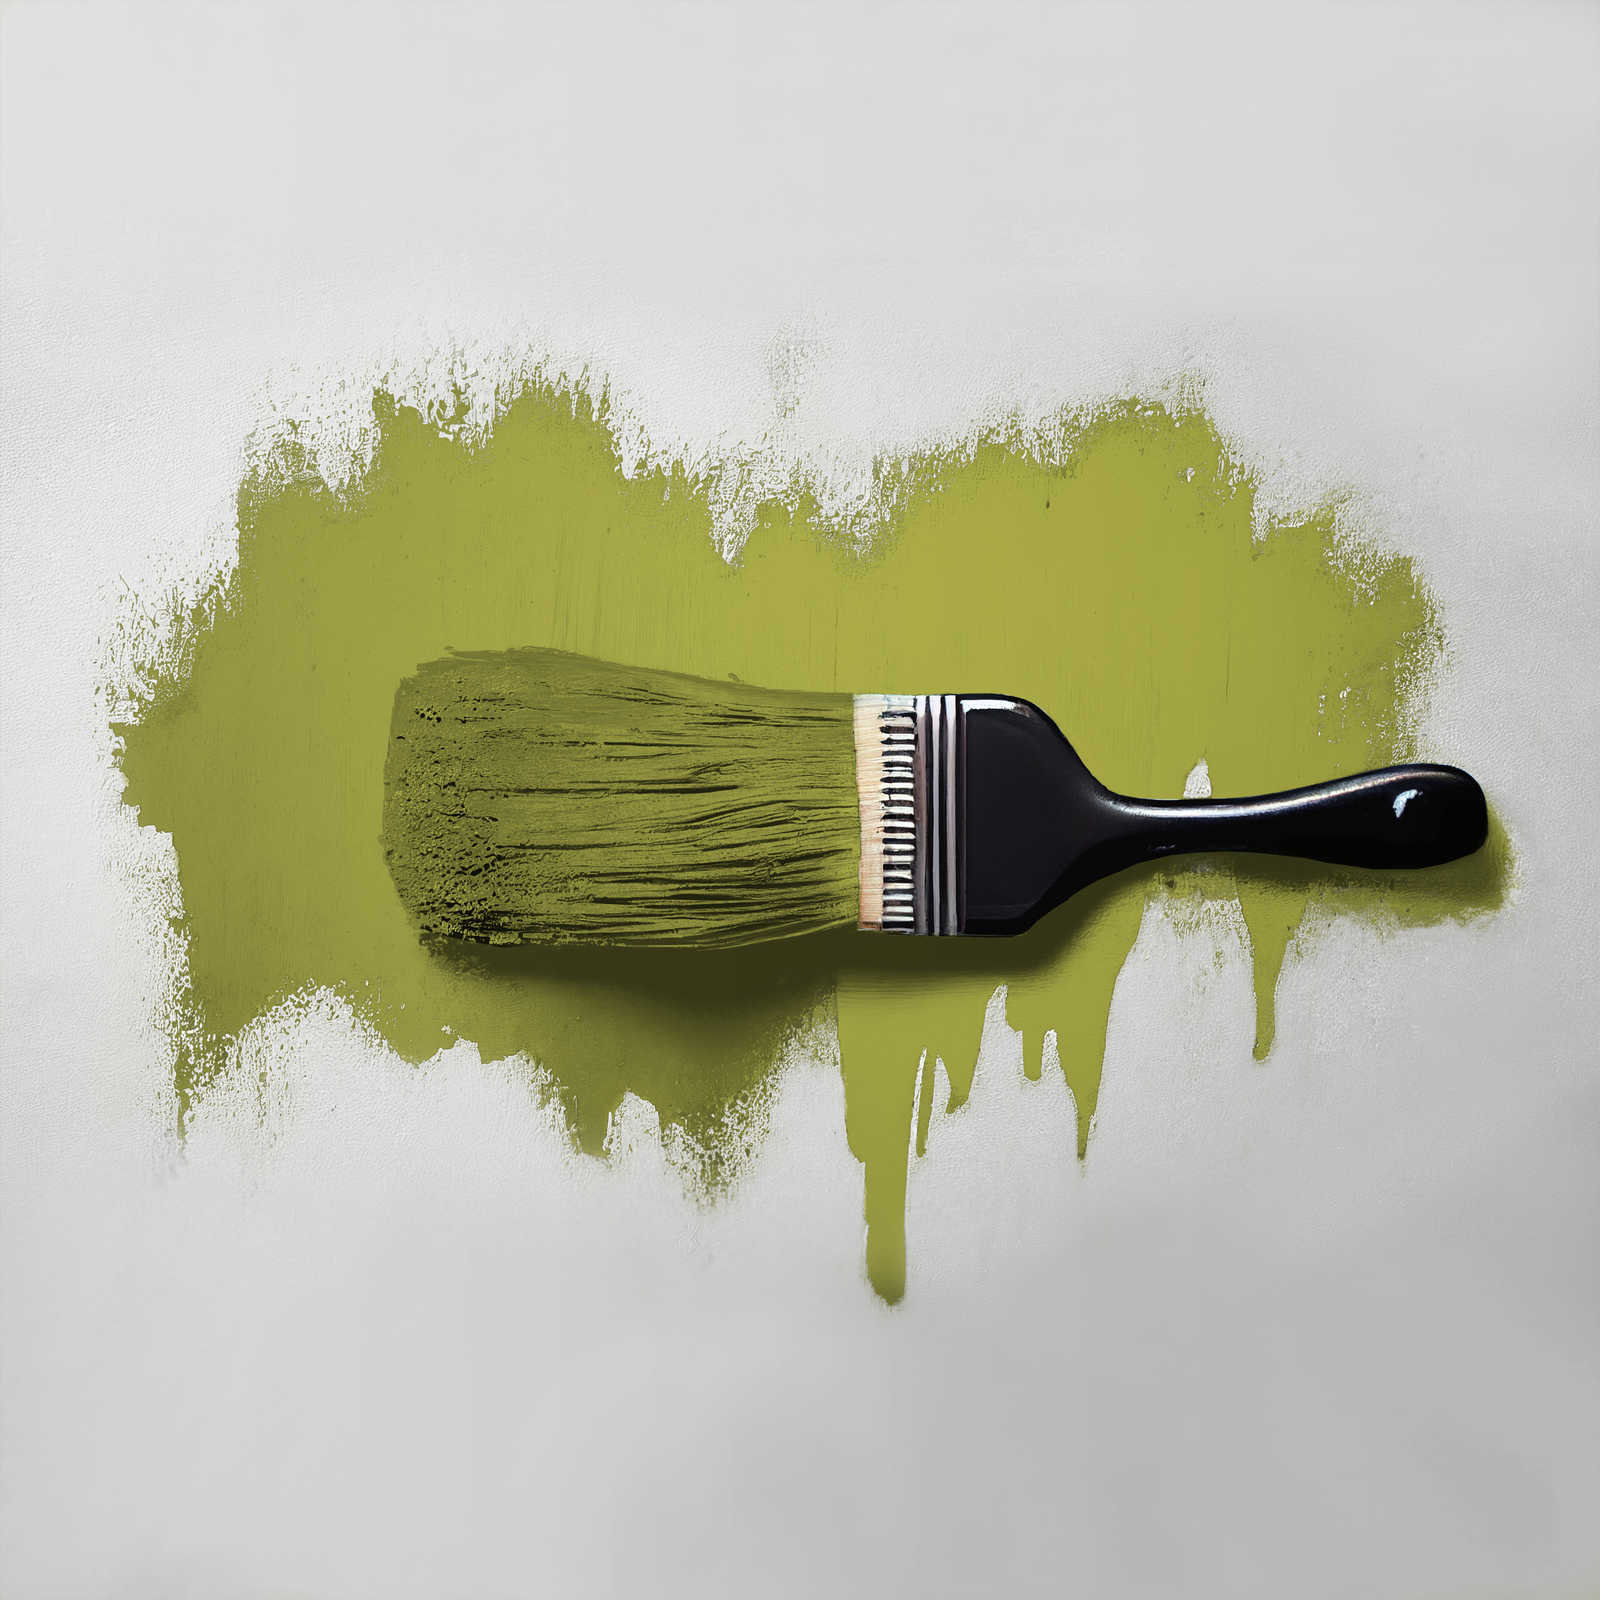             Pintura mural TCK4009 »Kitchy Kiwi« en amarillo brillante verde – 5,0 litro
        